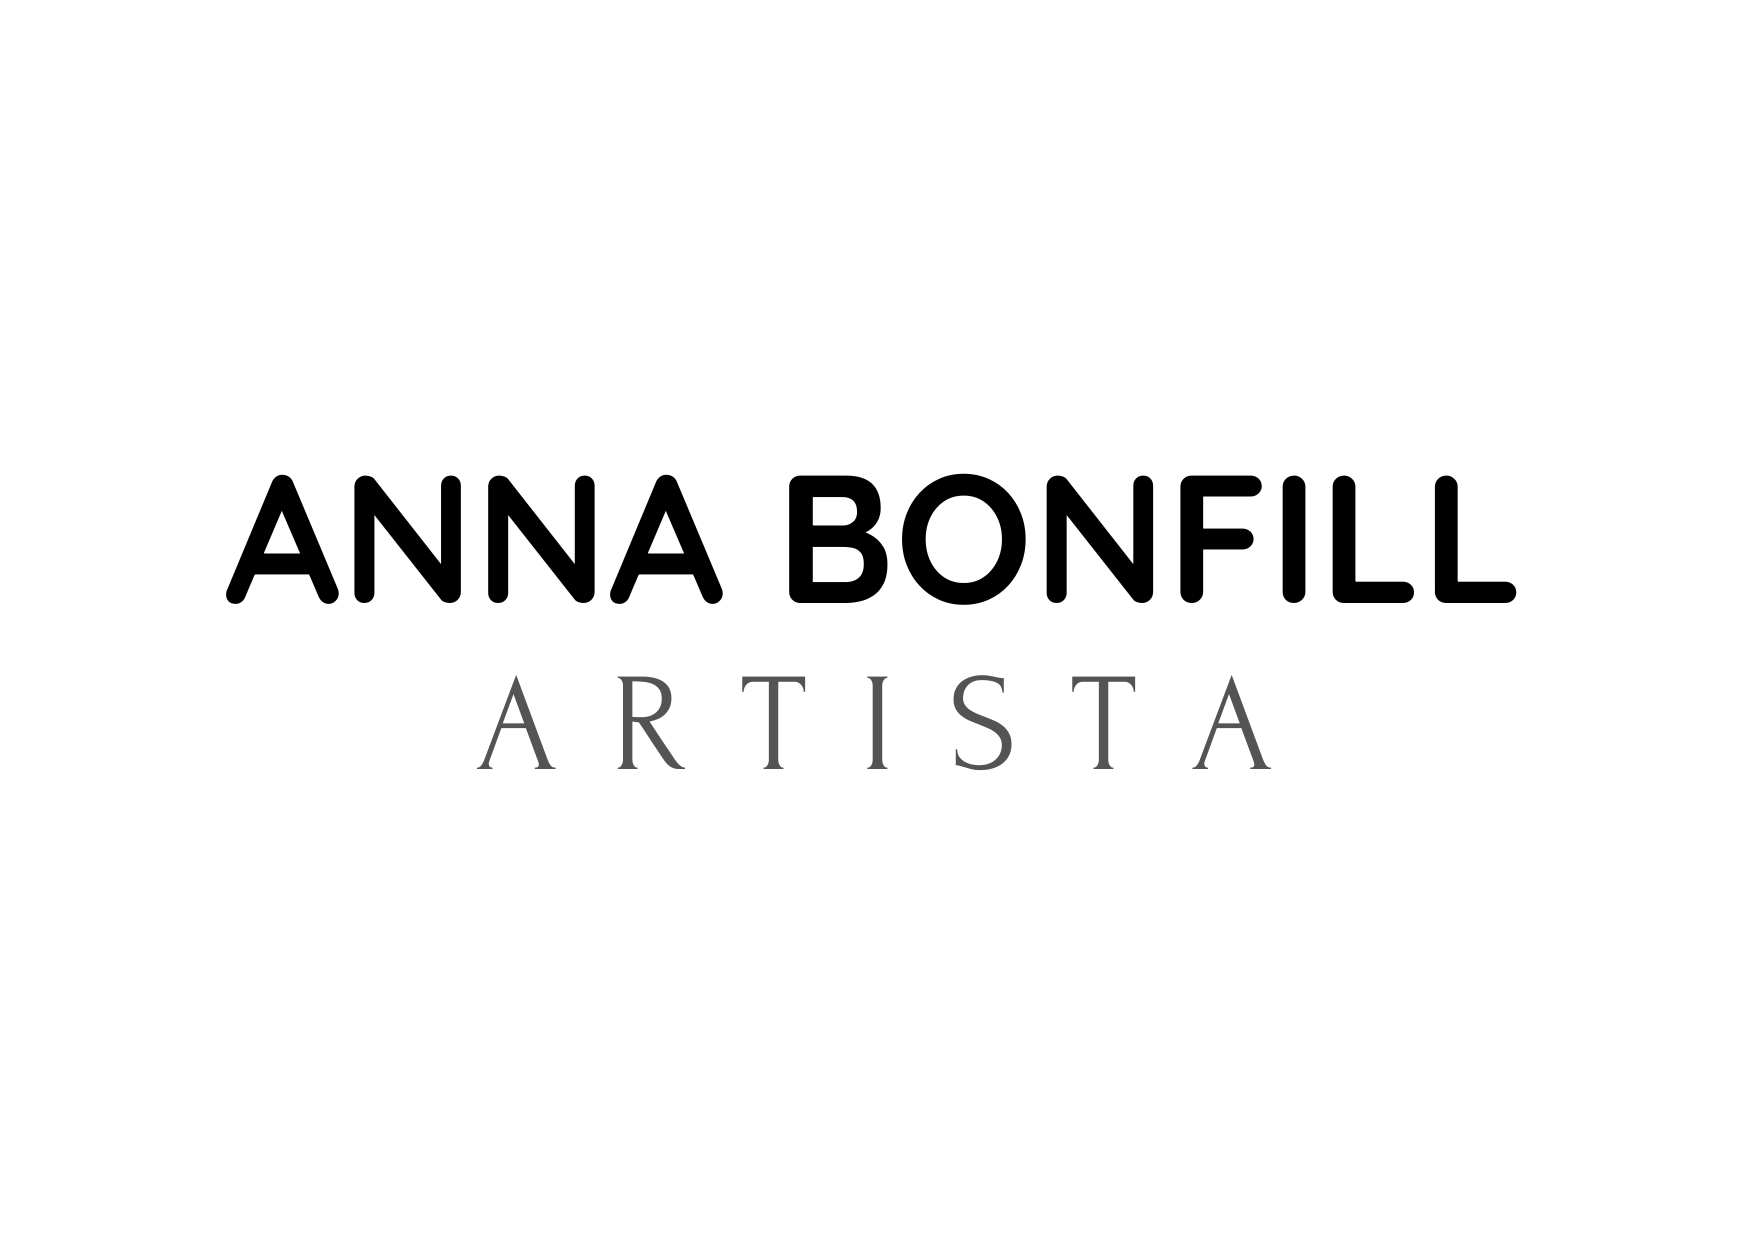 Anna Bonfill